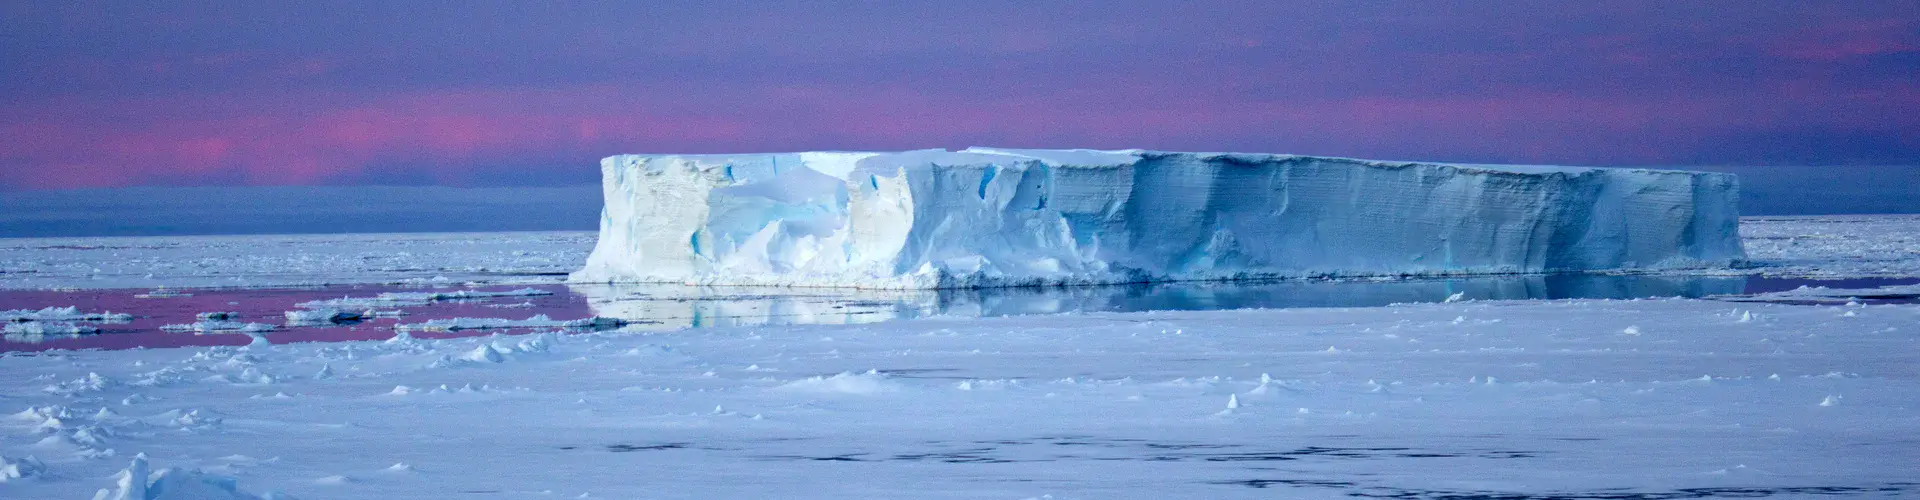 Tabular iceberg surrounded by sea ice in the Antarctic (Credit: Eva Nowatzki, distributed via imaggeo.egu.eu)